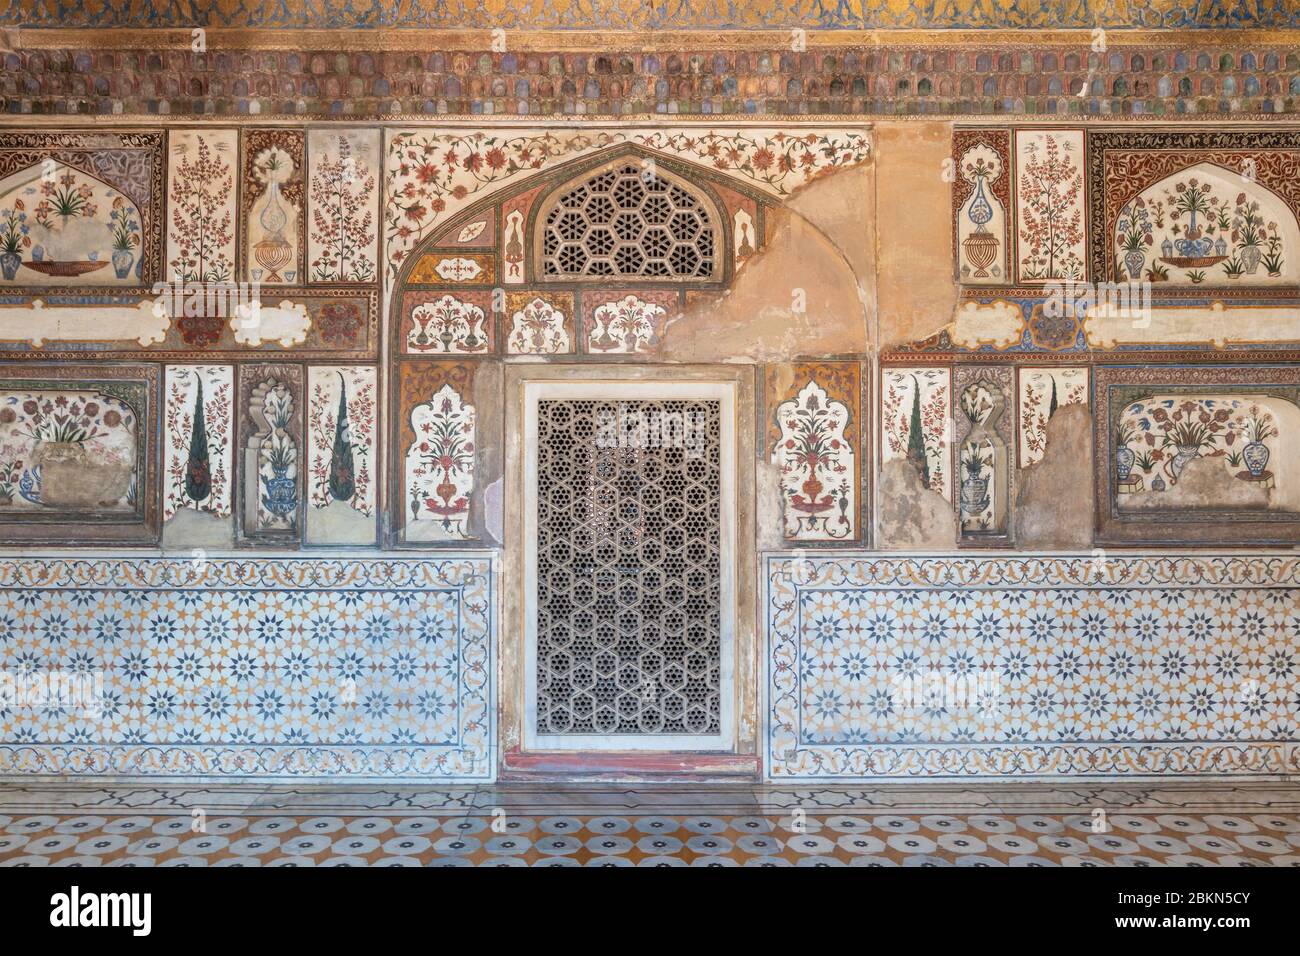 Itimad-ud-Daulah mausoleum interior, Baby Taj, 1628, Agra, Uttar Pradesh, India Stock Photo